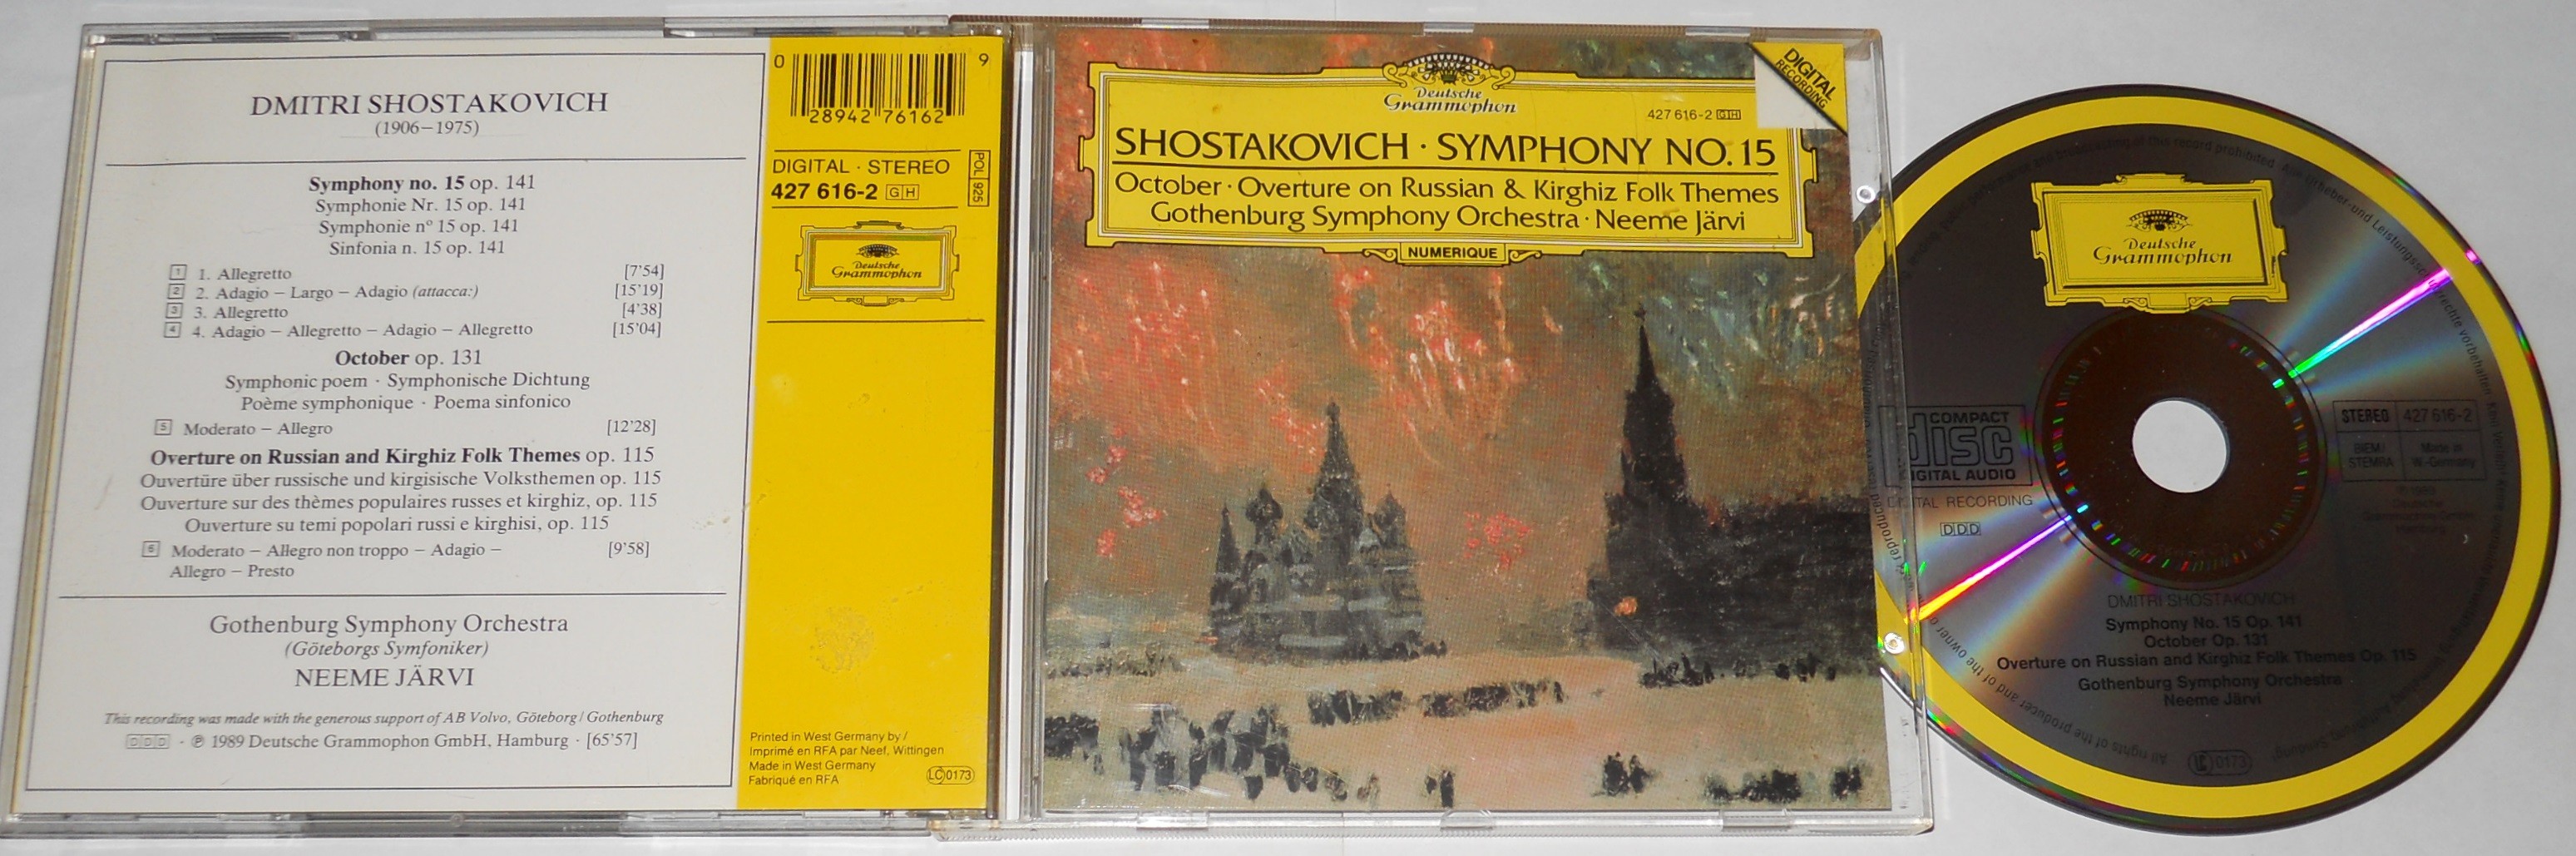 symphony no. 15